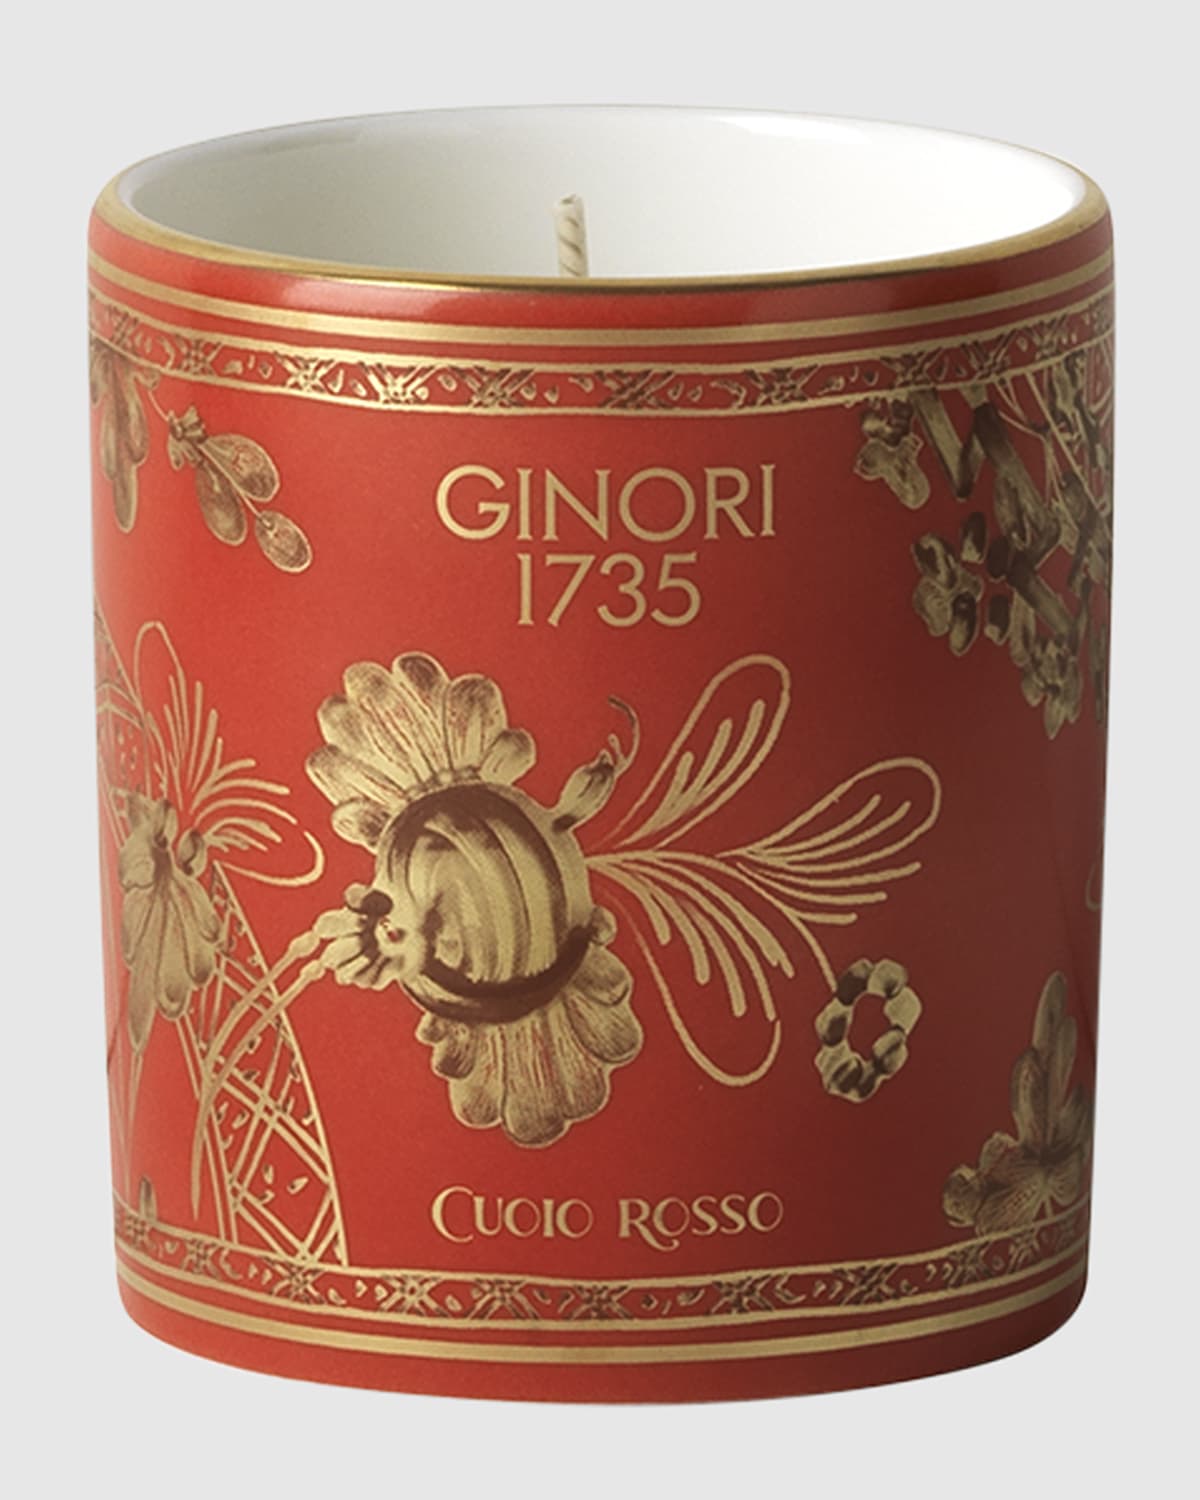 Ginori 1735 Oriente Italiano Rubrum Cuoio Rosso Candle, 250g In Oirubrum-cuoio